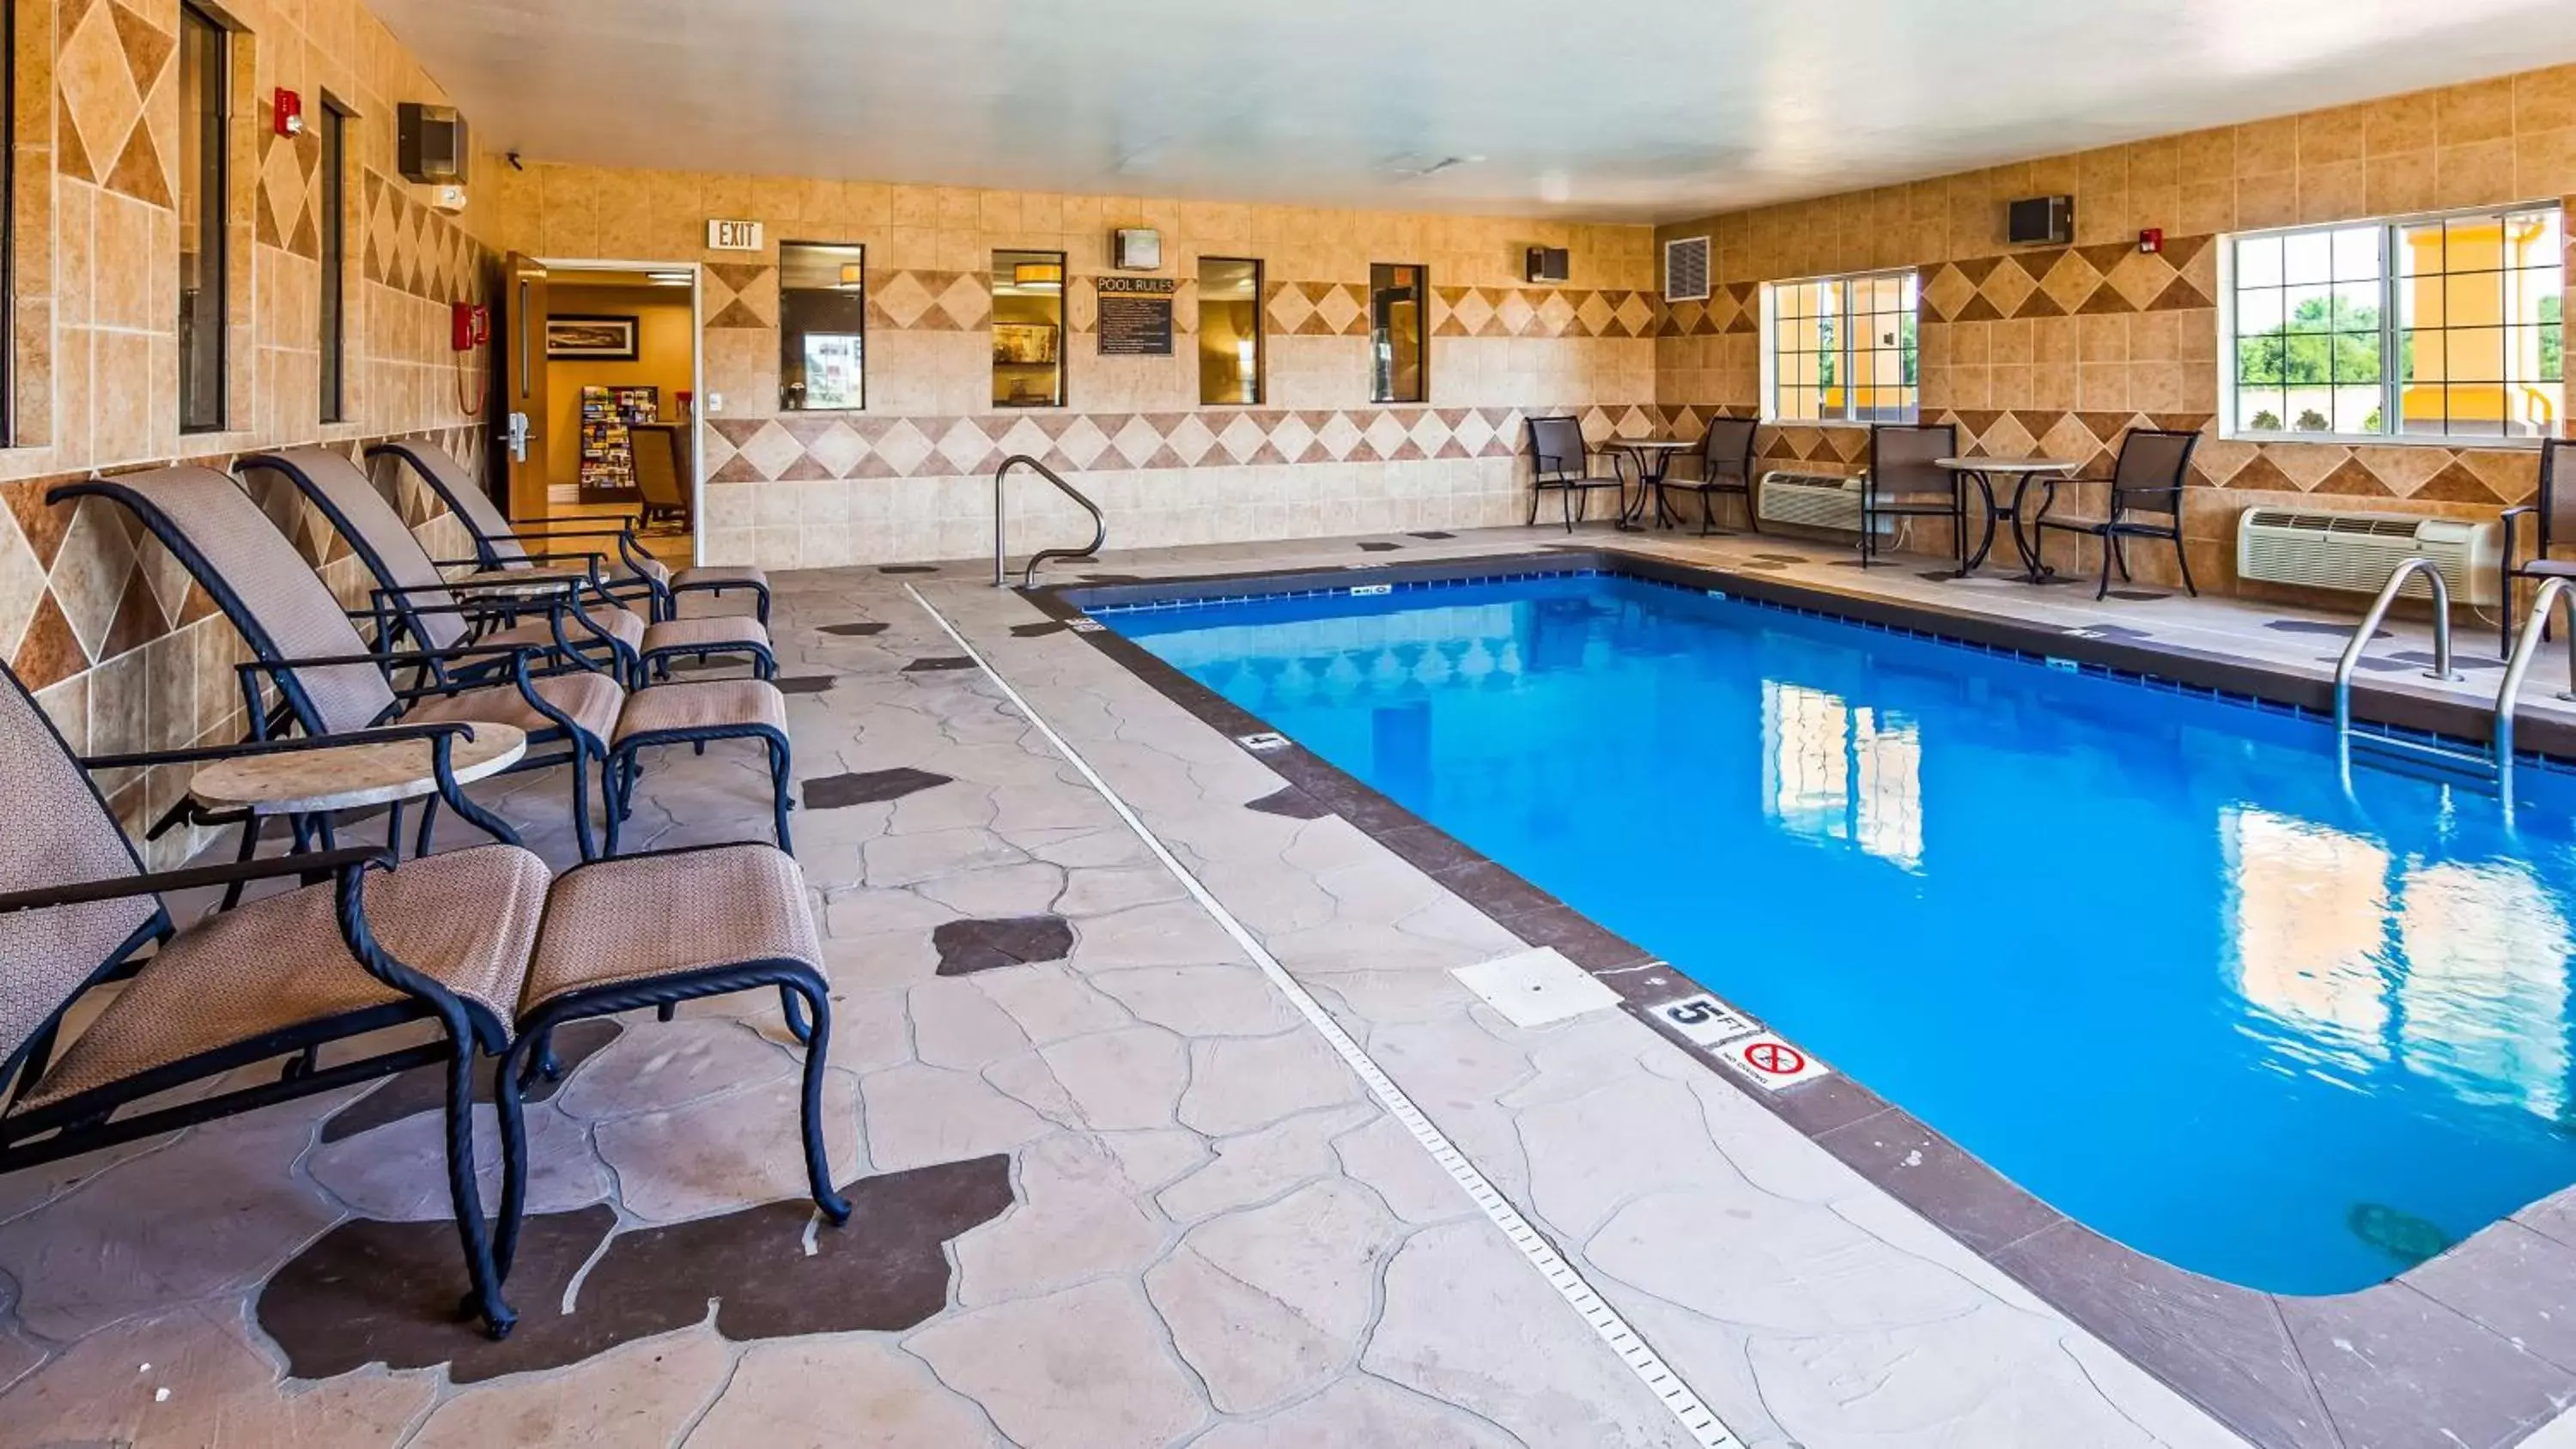 On site, Swimming Pool in Best Western Parsons Inn